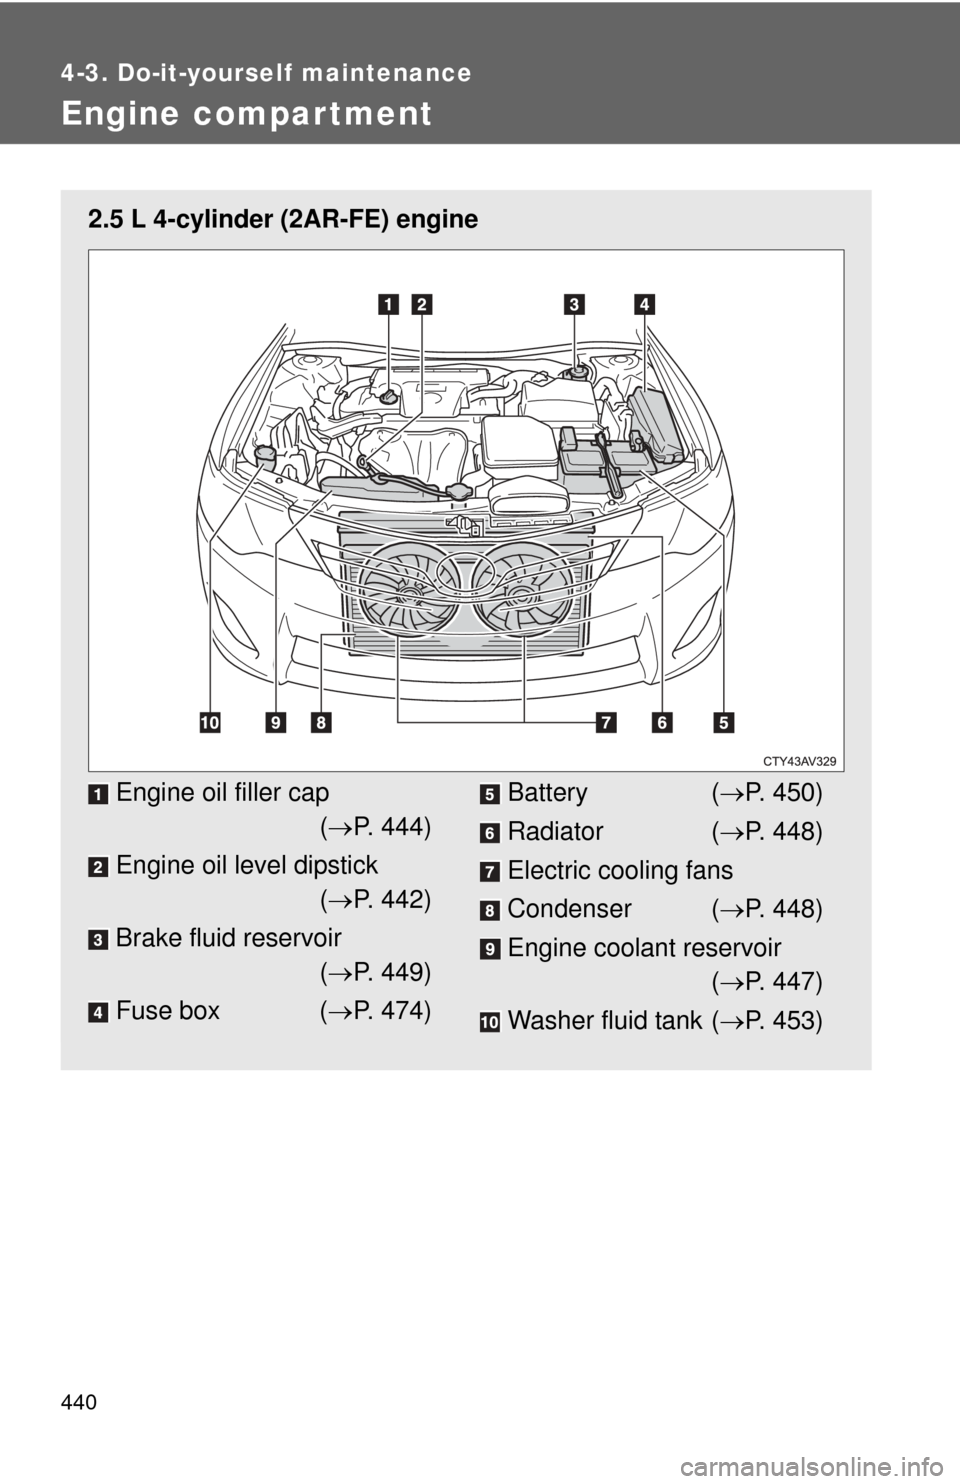 TOYOTA CAMRY 2014 XV50 / 9.G Owners Manual 440
4-3. Do-it-yourself maintenance
Engine compar tment
2.5 L 4-cylinder (2AR-FE) engine
Engine oil filler cap( P. 444)
Engine oil level dipstick ( P. 442)
Brake fluid reservoir ( P. 449)
Fus